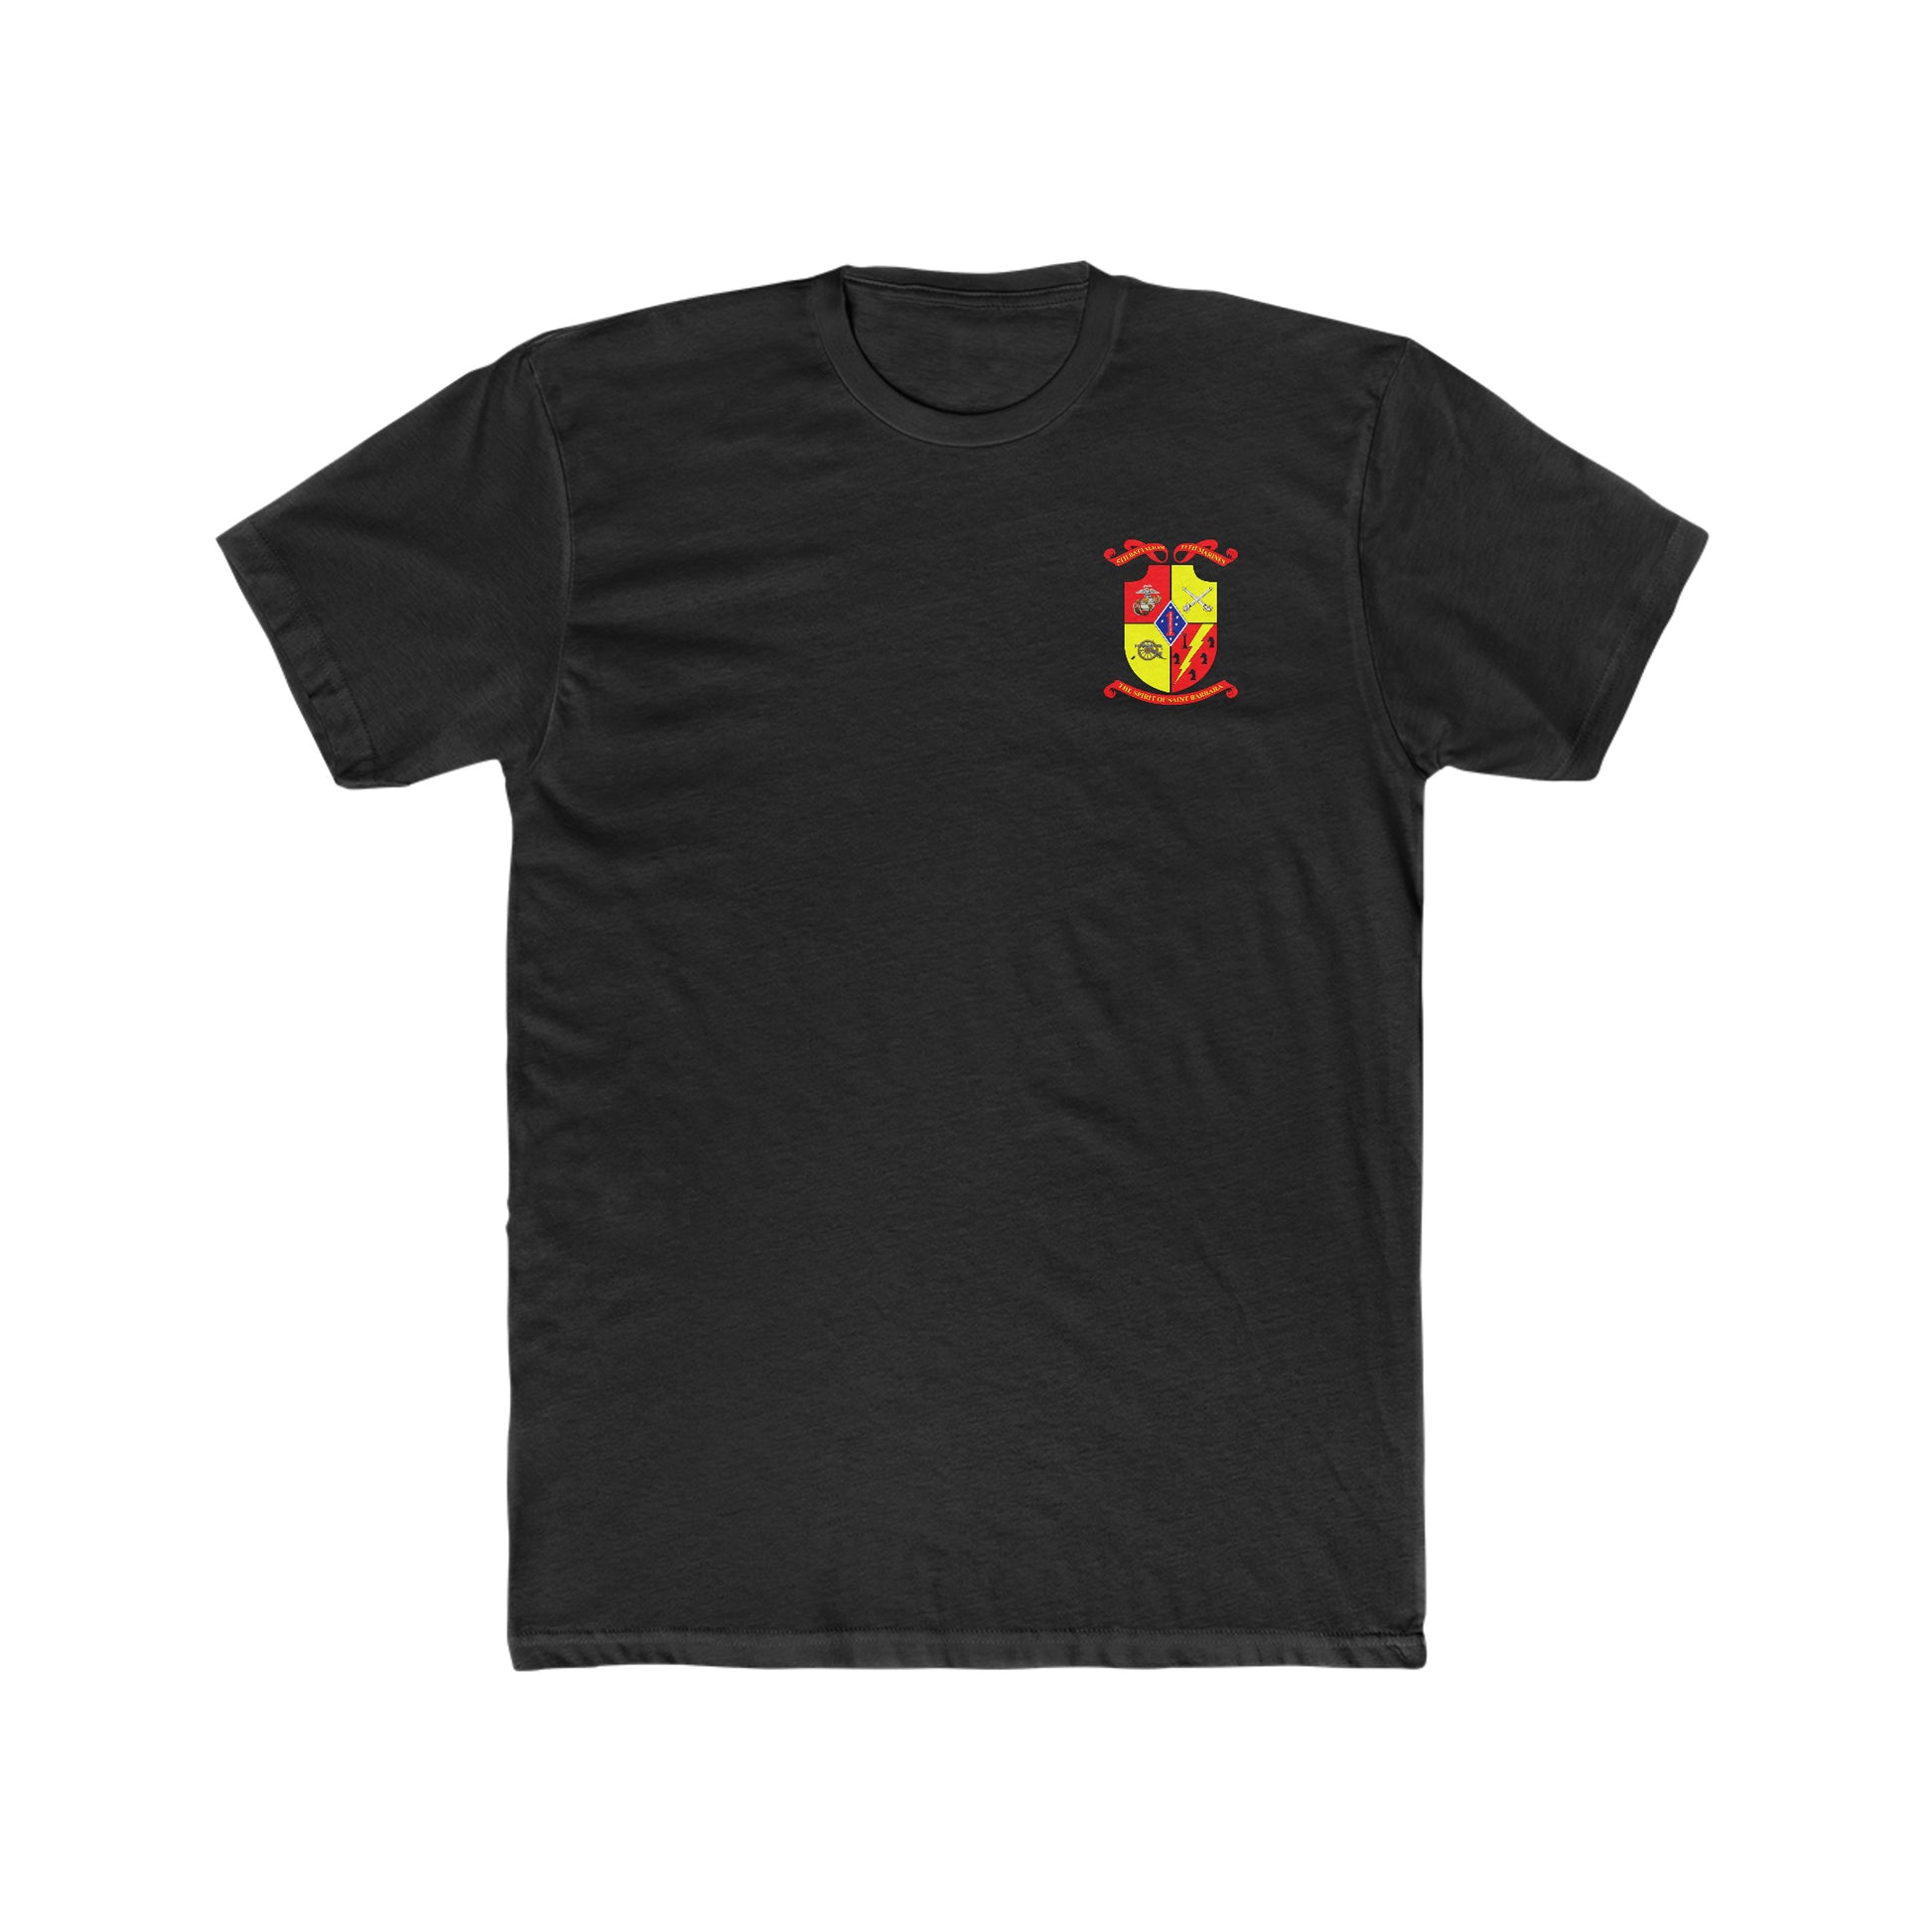 Black 5th Battalion 11th Marine Regiment Shirt